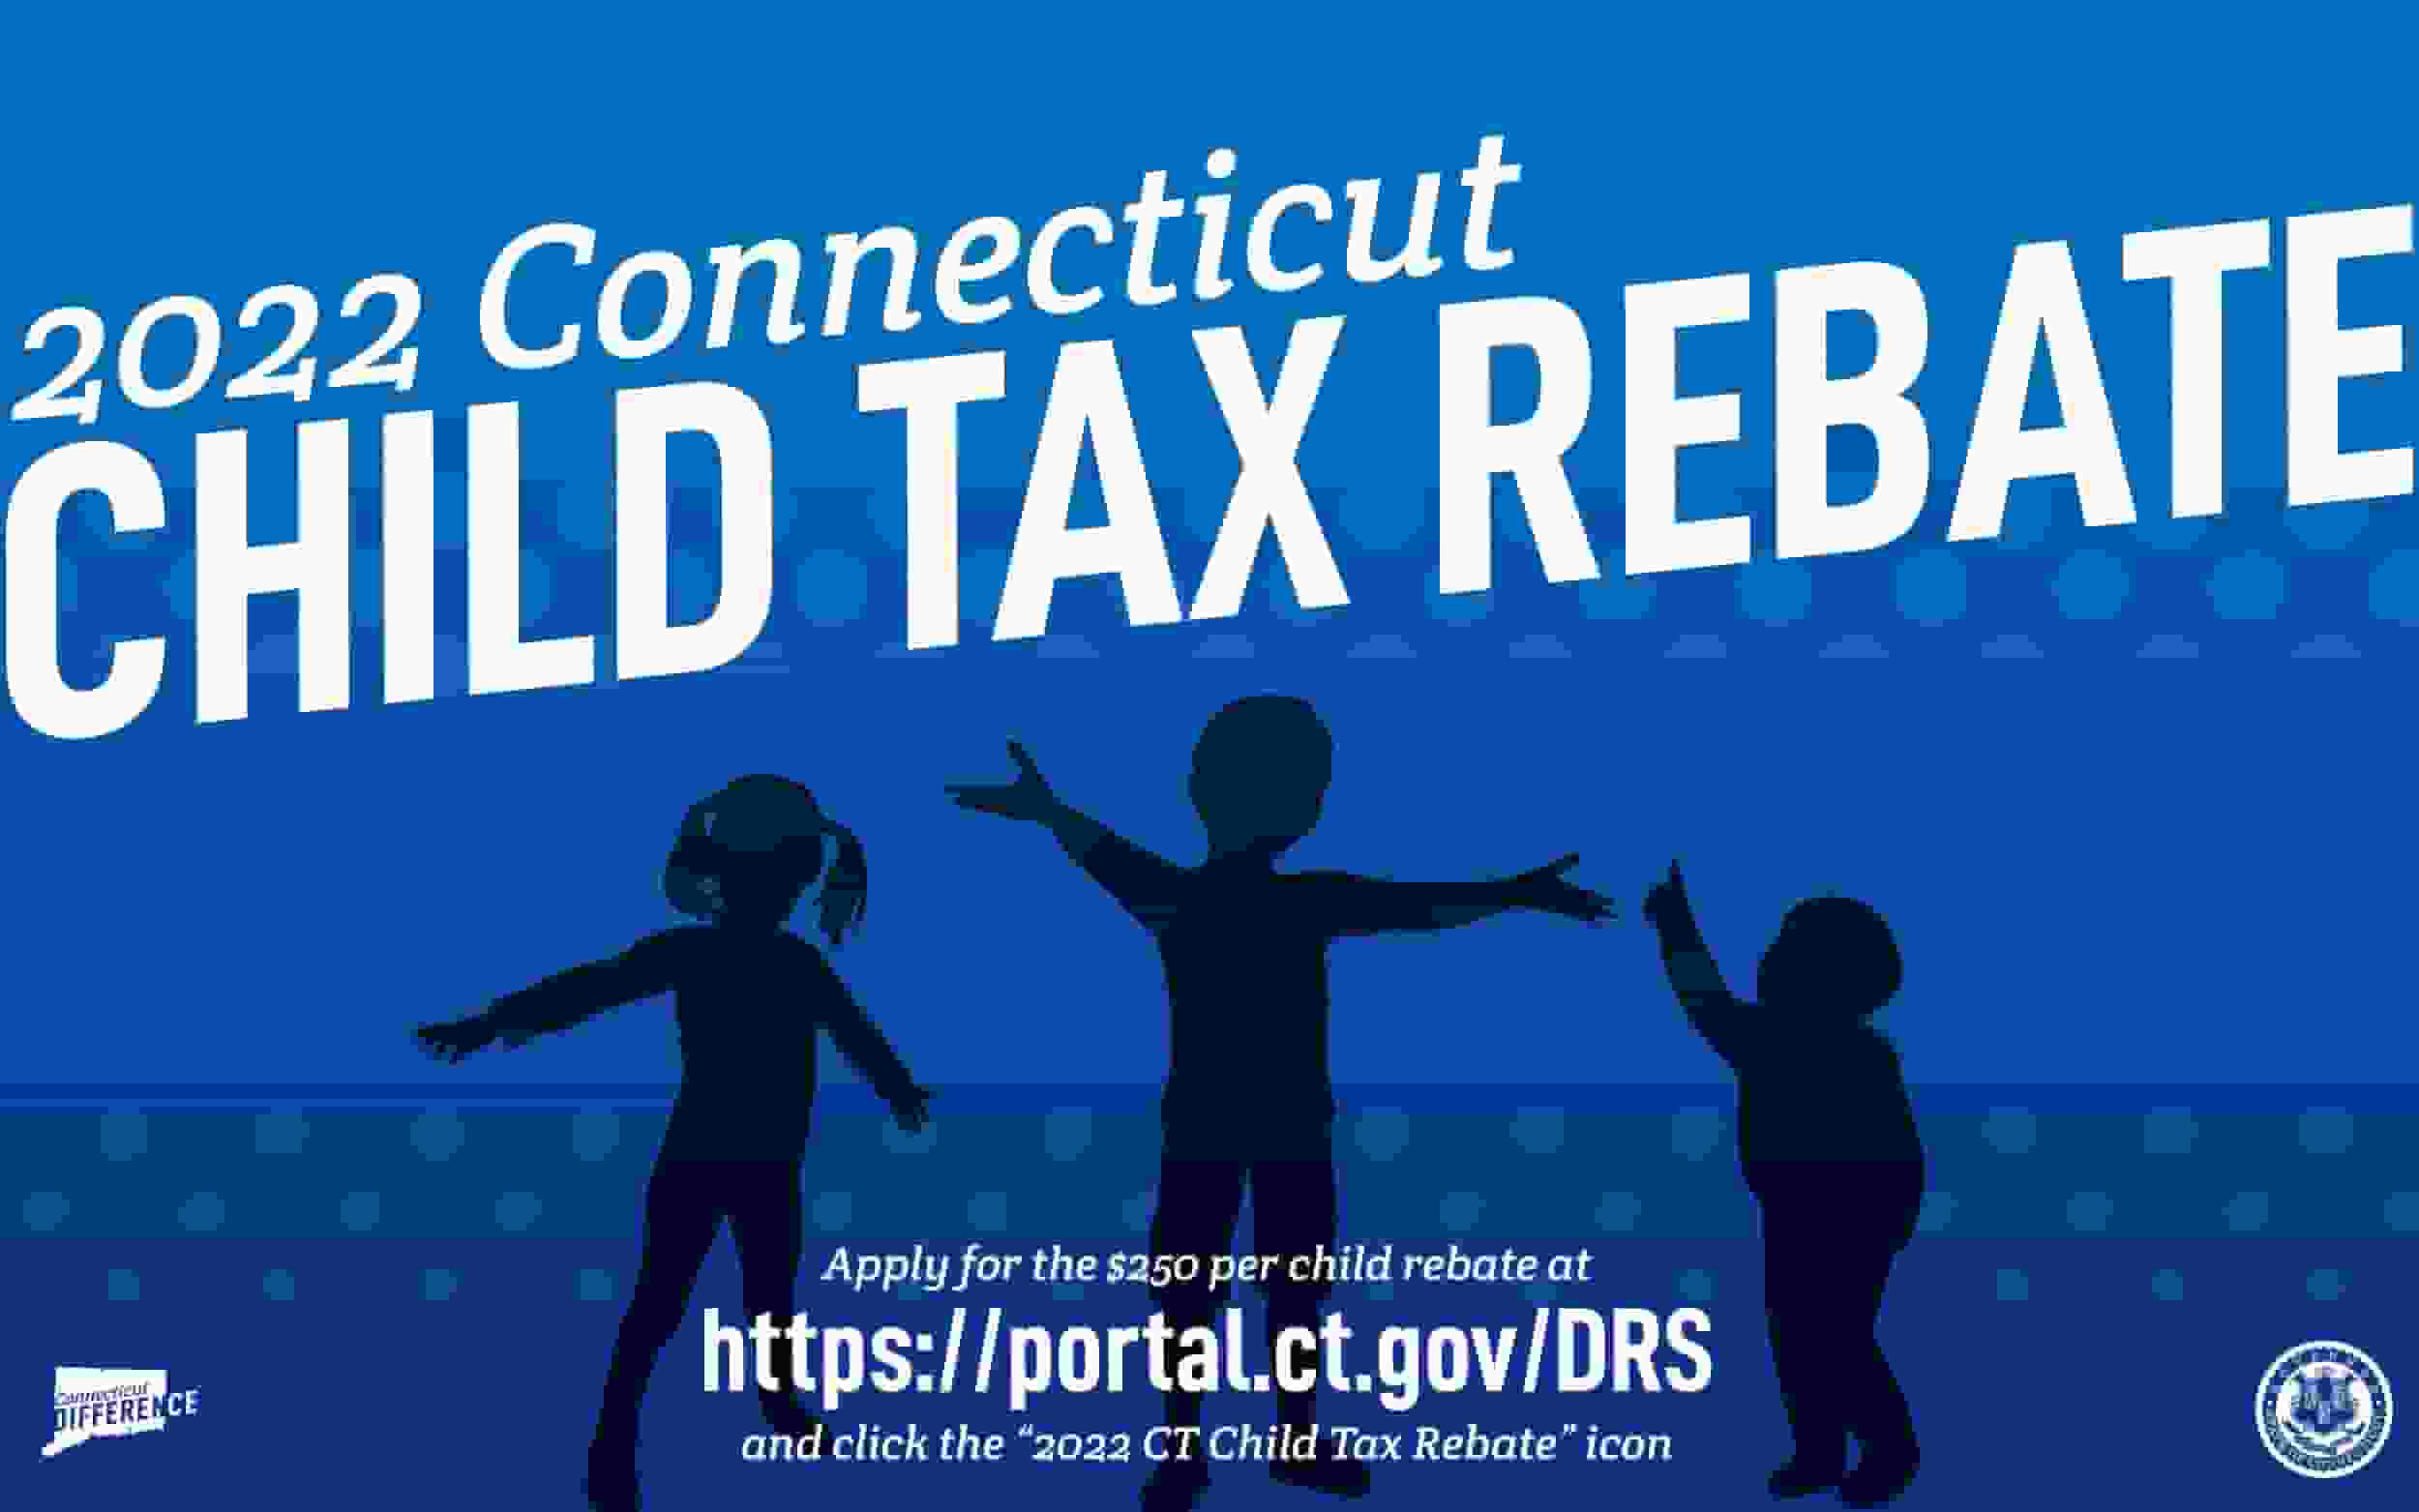 Connecticut's Child Tax Rebate Program